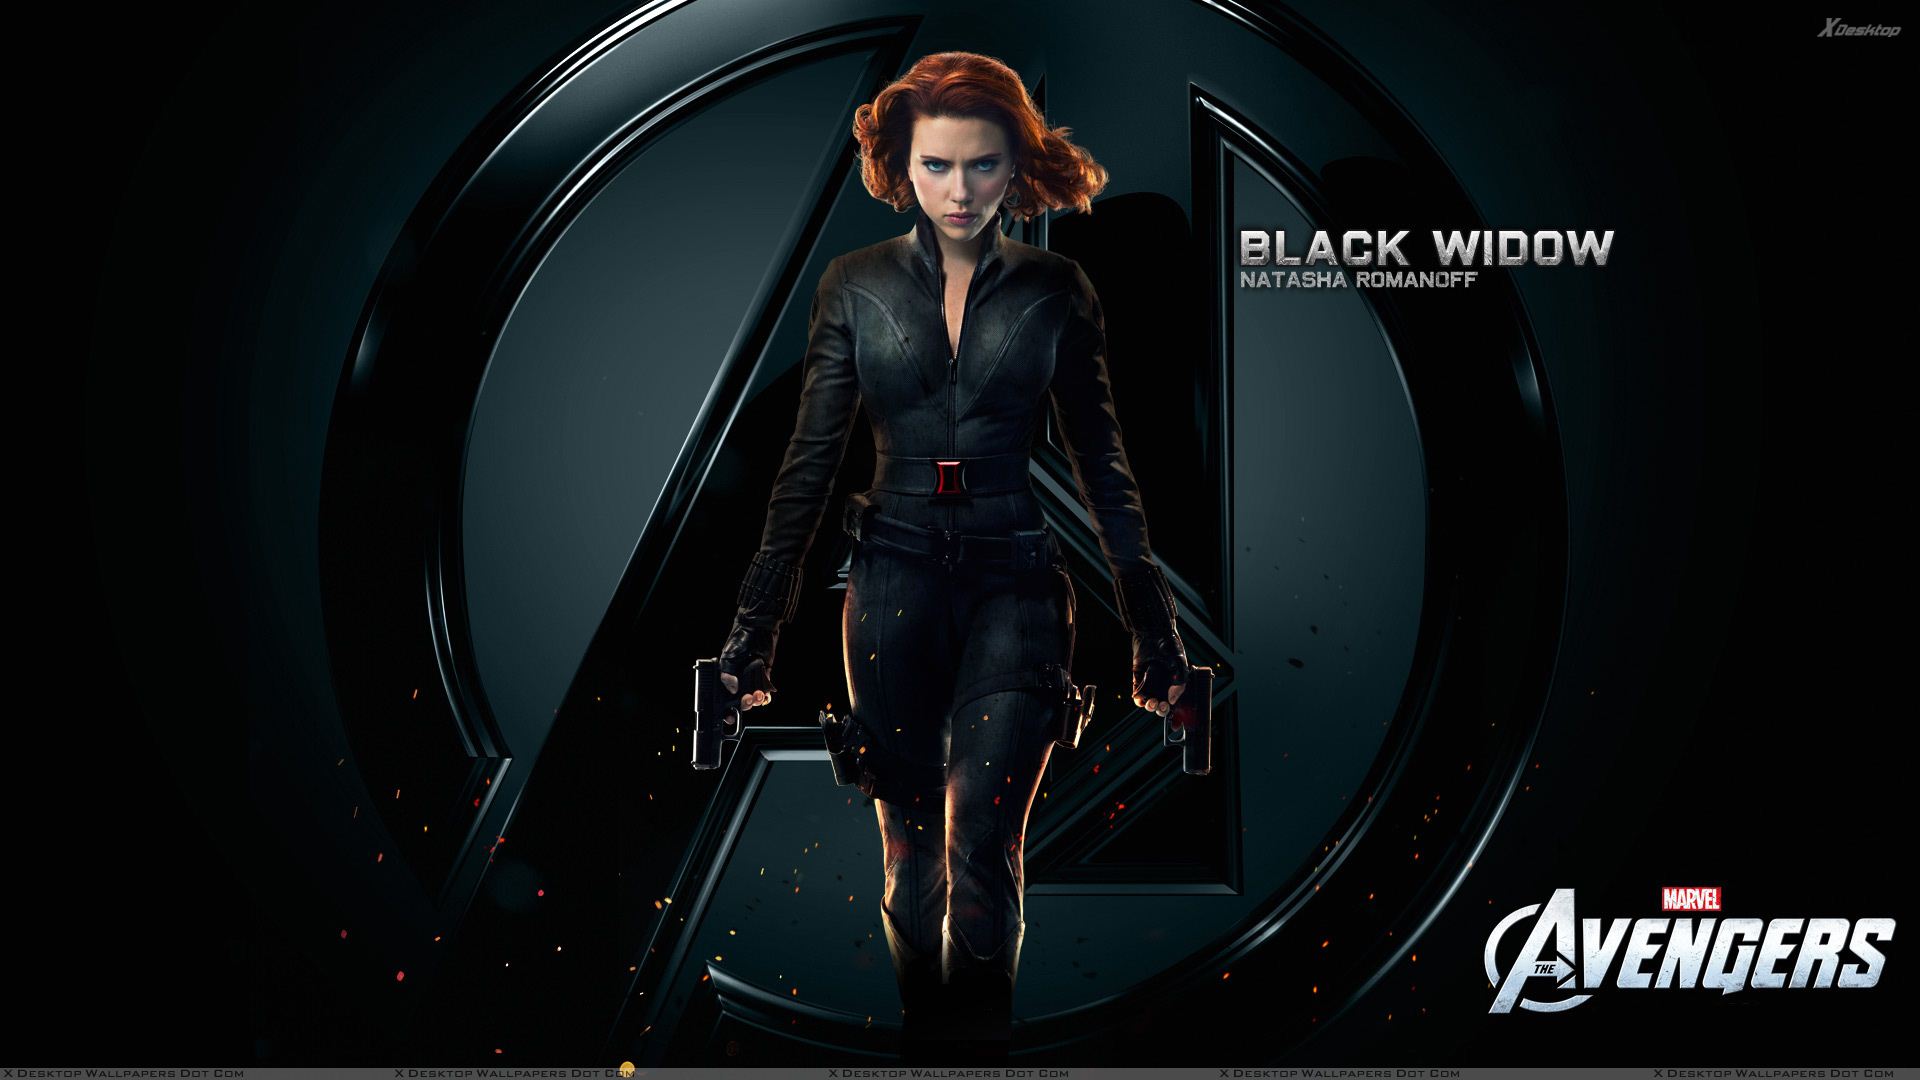 The Avengers Scarlett Johansson Black Widow Wallpaper